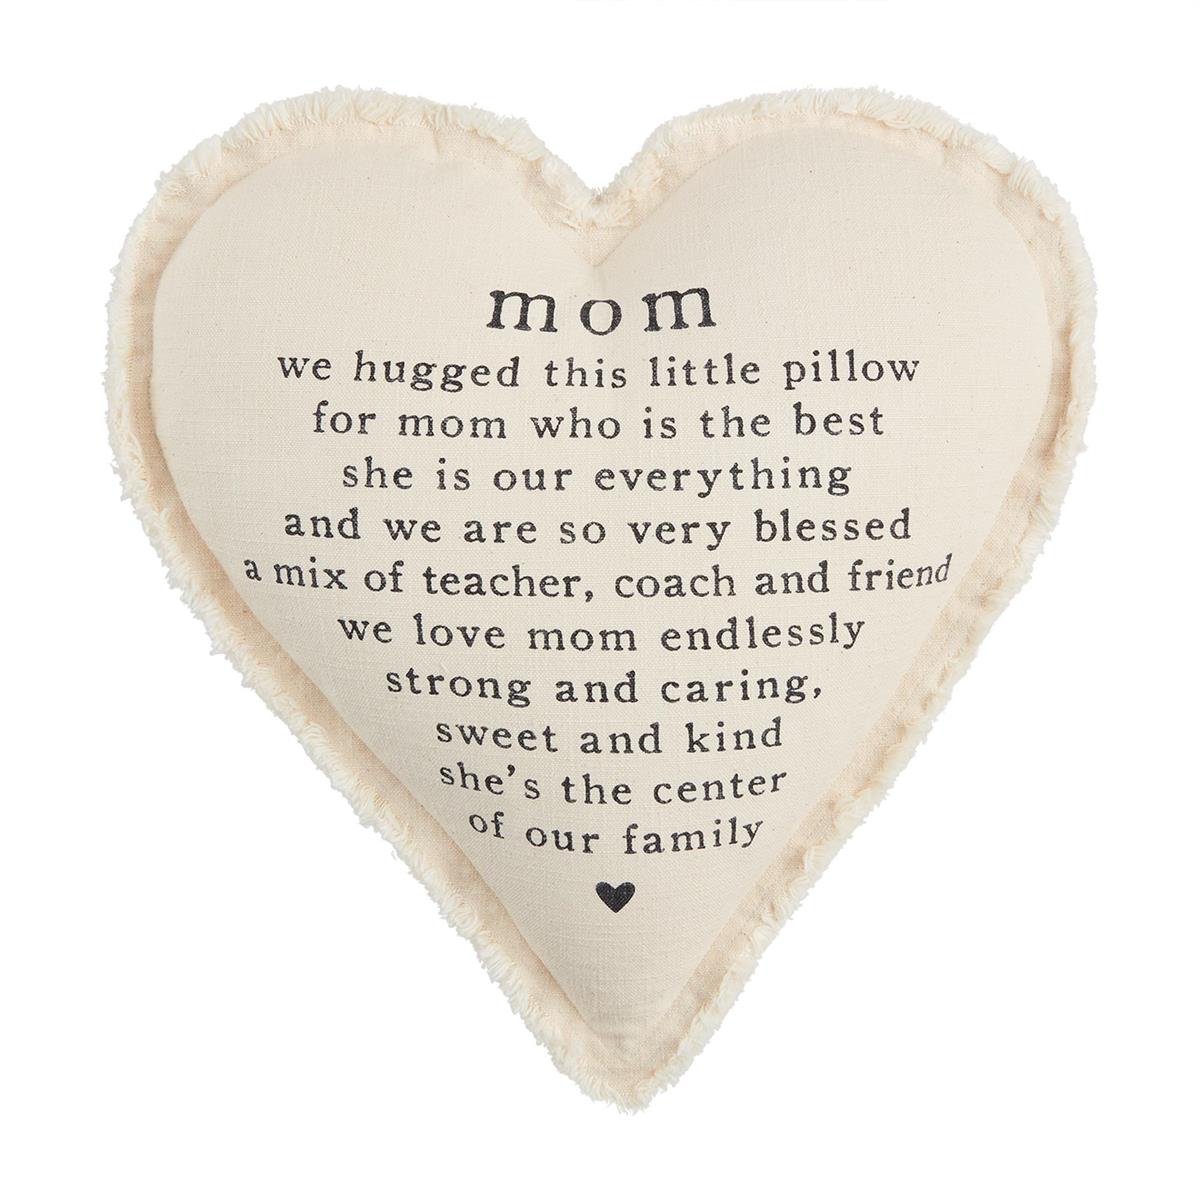 mom heart shaped pillow